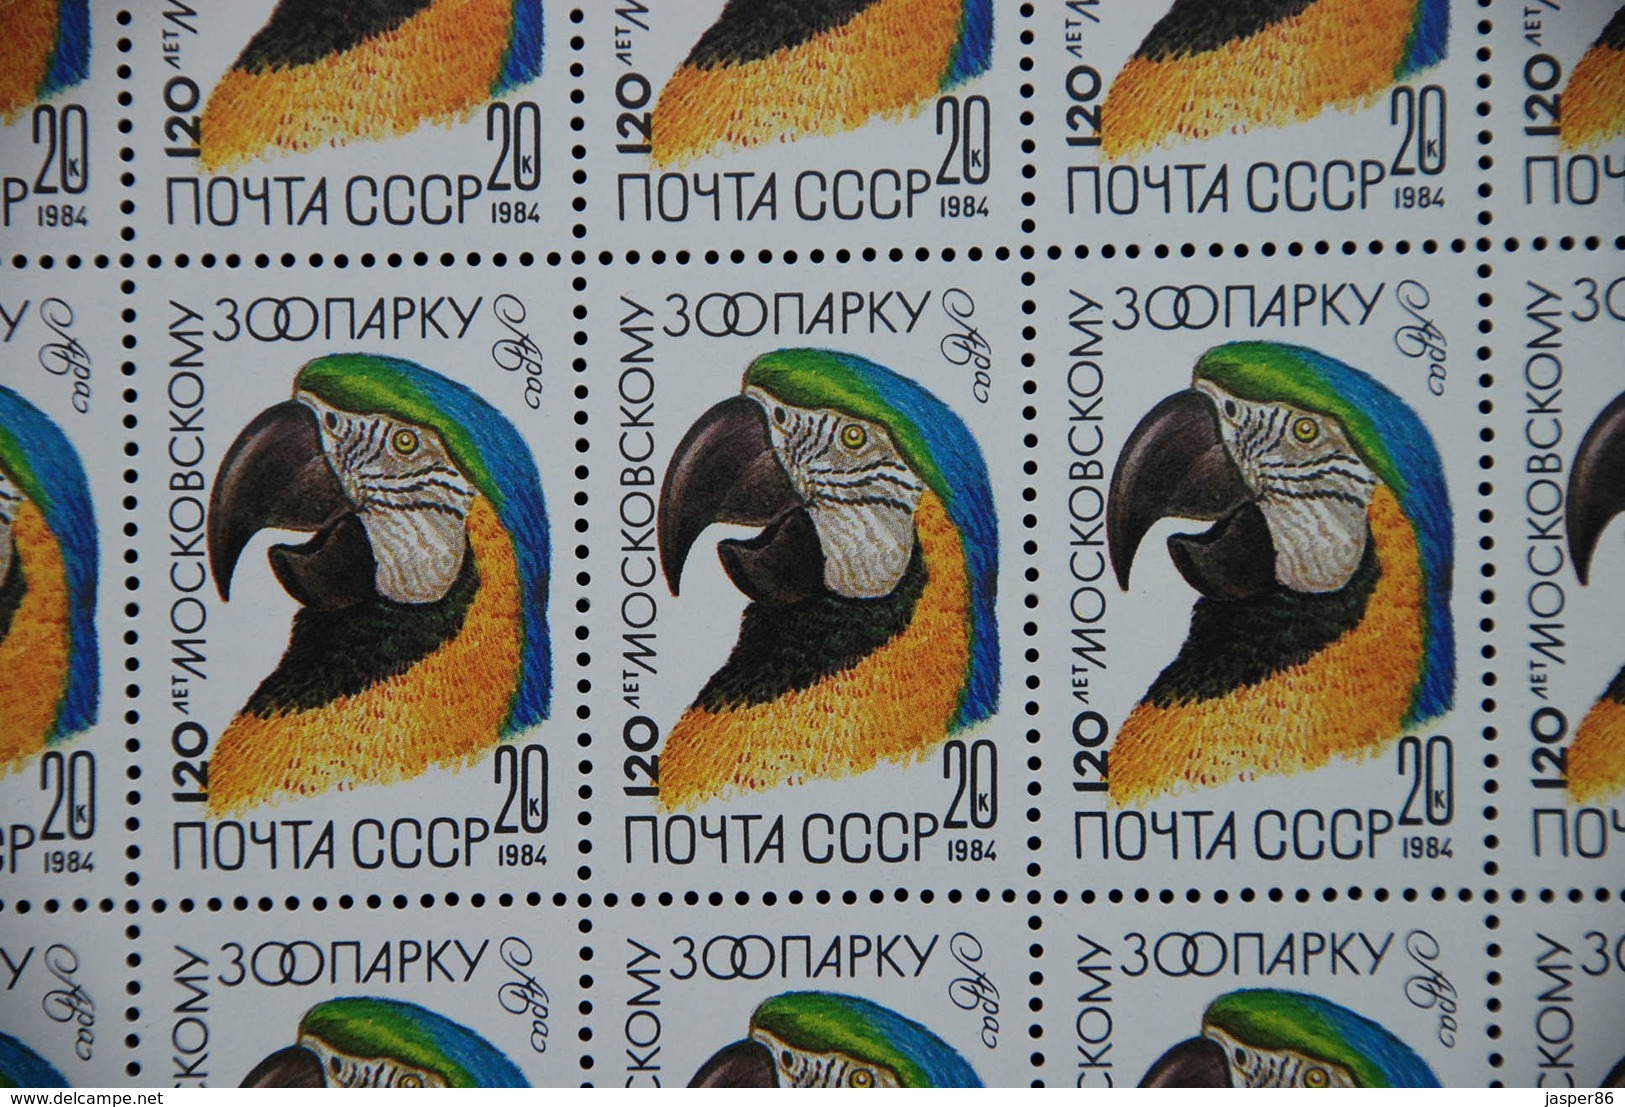 RUSSIA 1984 MNH Sc 5226-30, Mi 5356-60 Macaw, Crane, Leopard Sheets CV46.80 EU - Ganze Bögen